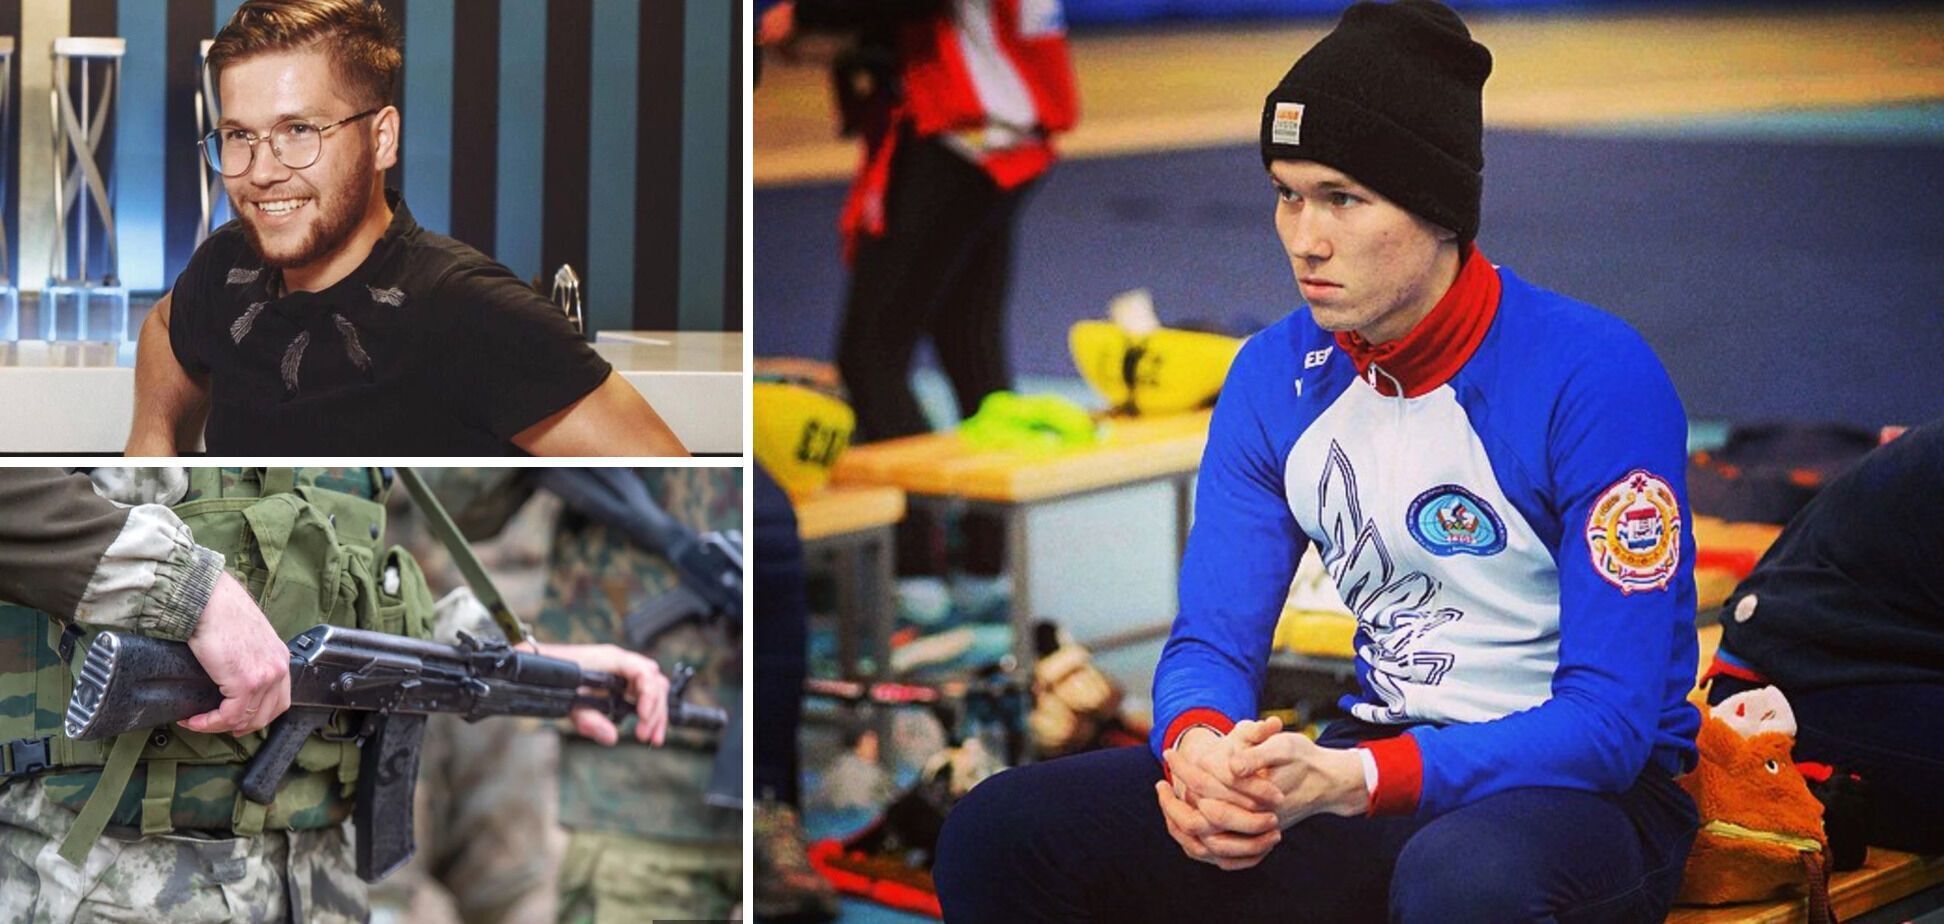 Universiade champion went to kill Ukrainians